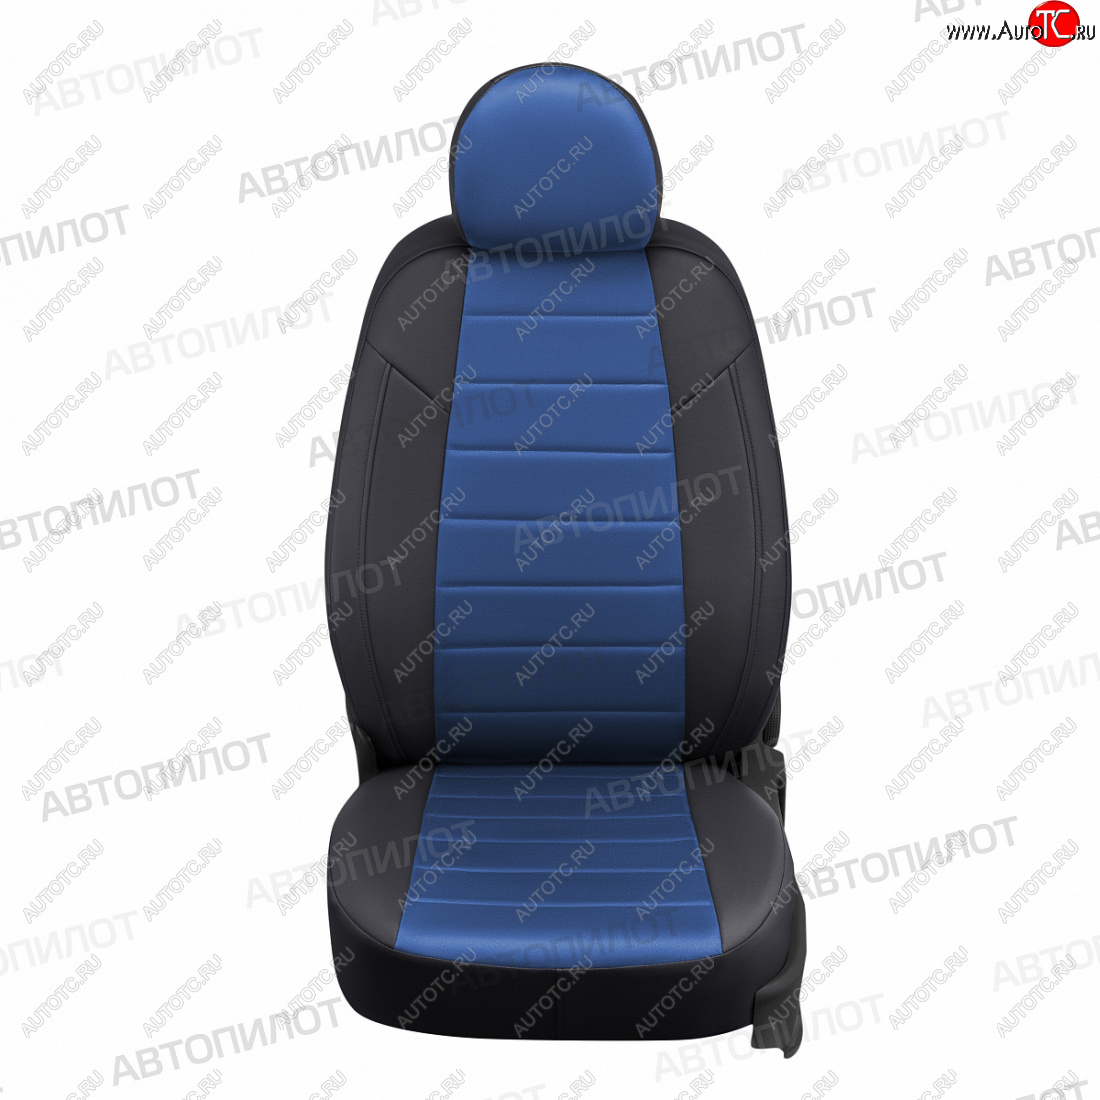 7 249 р. Чехлы сидений (экокожа/алькантара) Автопилот Hyundai Sonata LF дорестайлинг (2014-2017) (черный/синий)